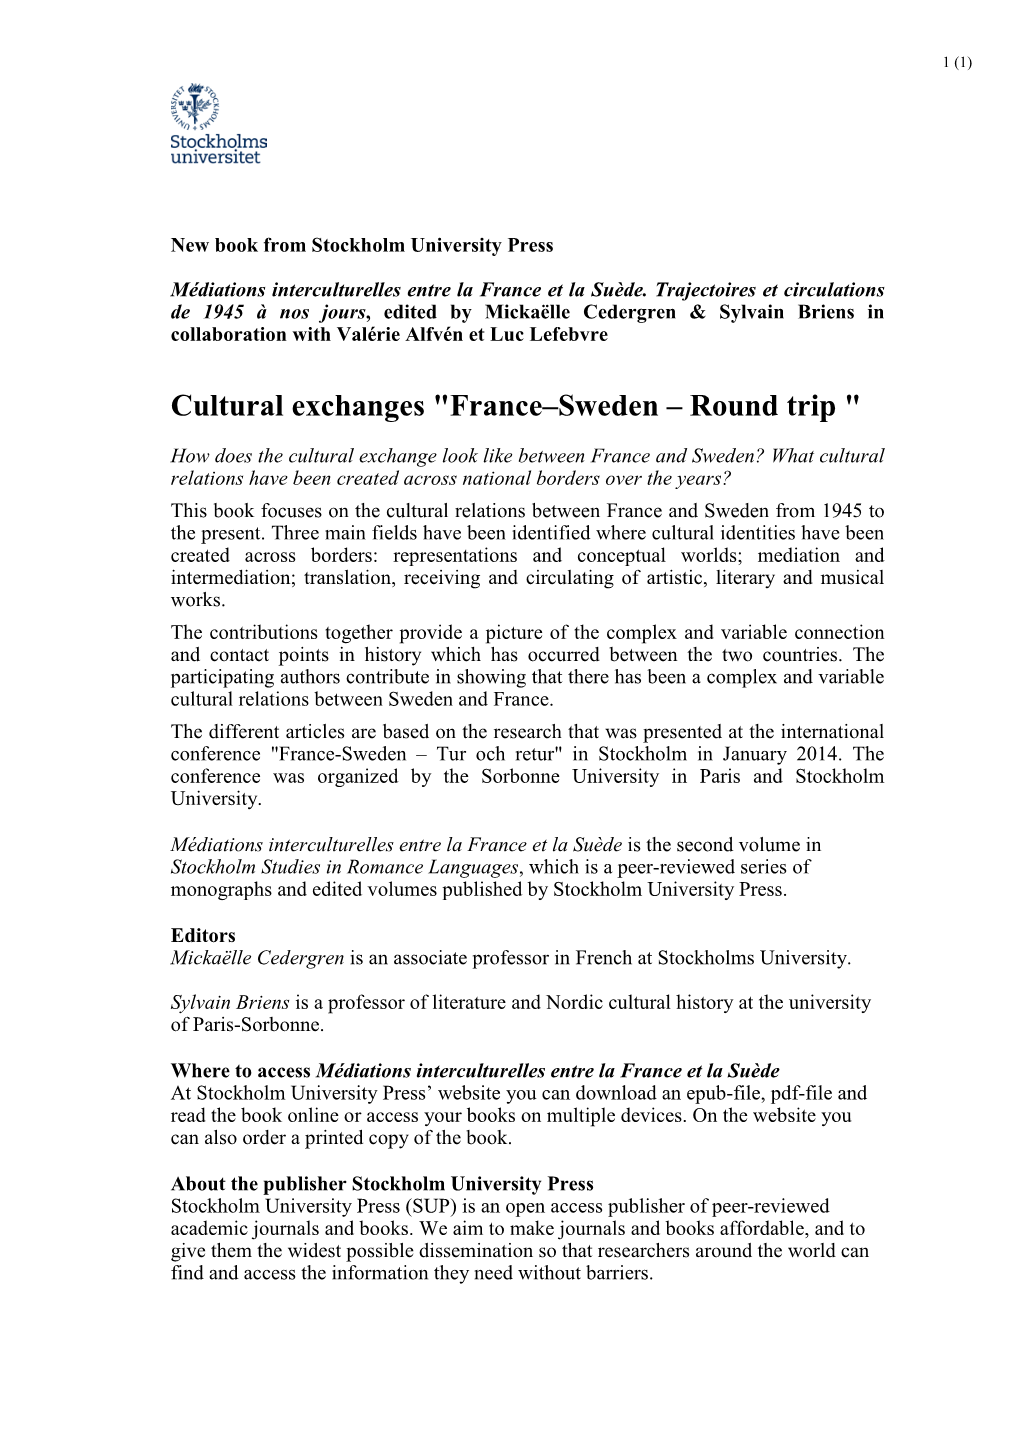 Cultural Exchanges "France–Sweden – Round Trip "